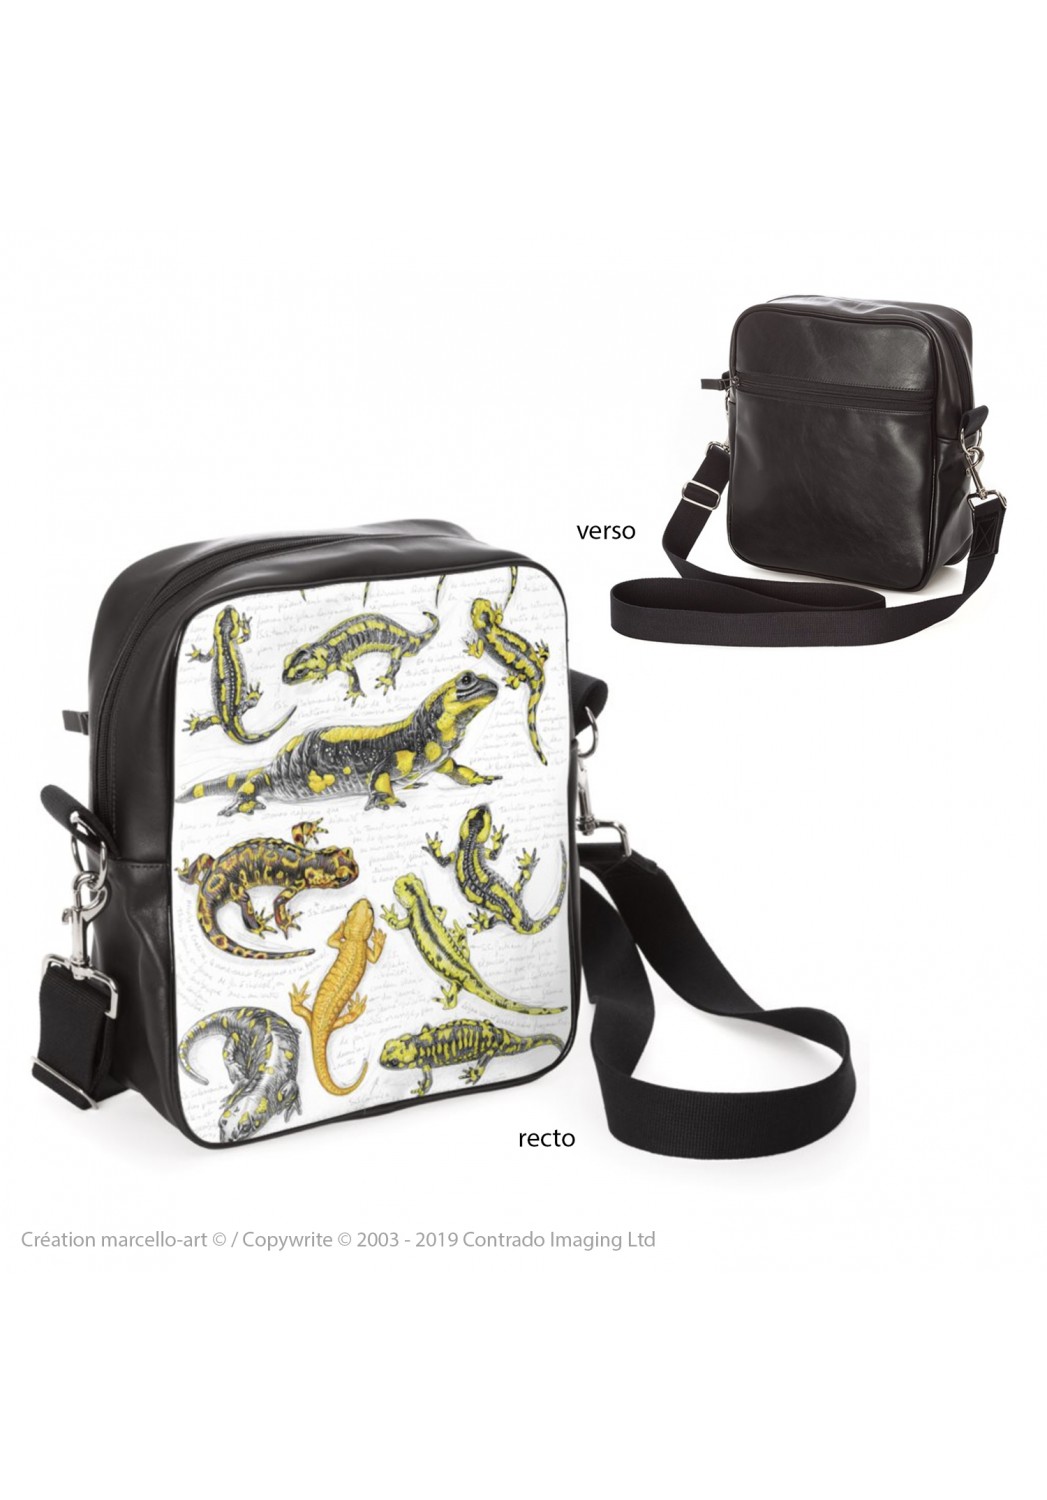 Marcello-art : Accessoires de mode Sacoche 383 salamandre